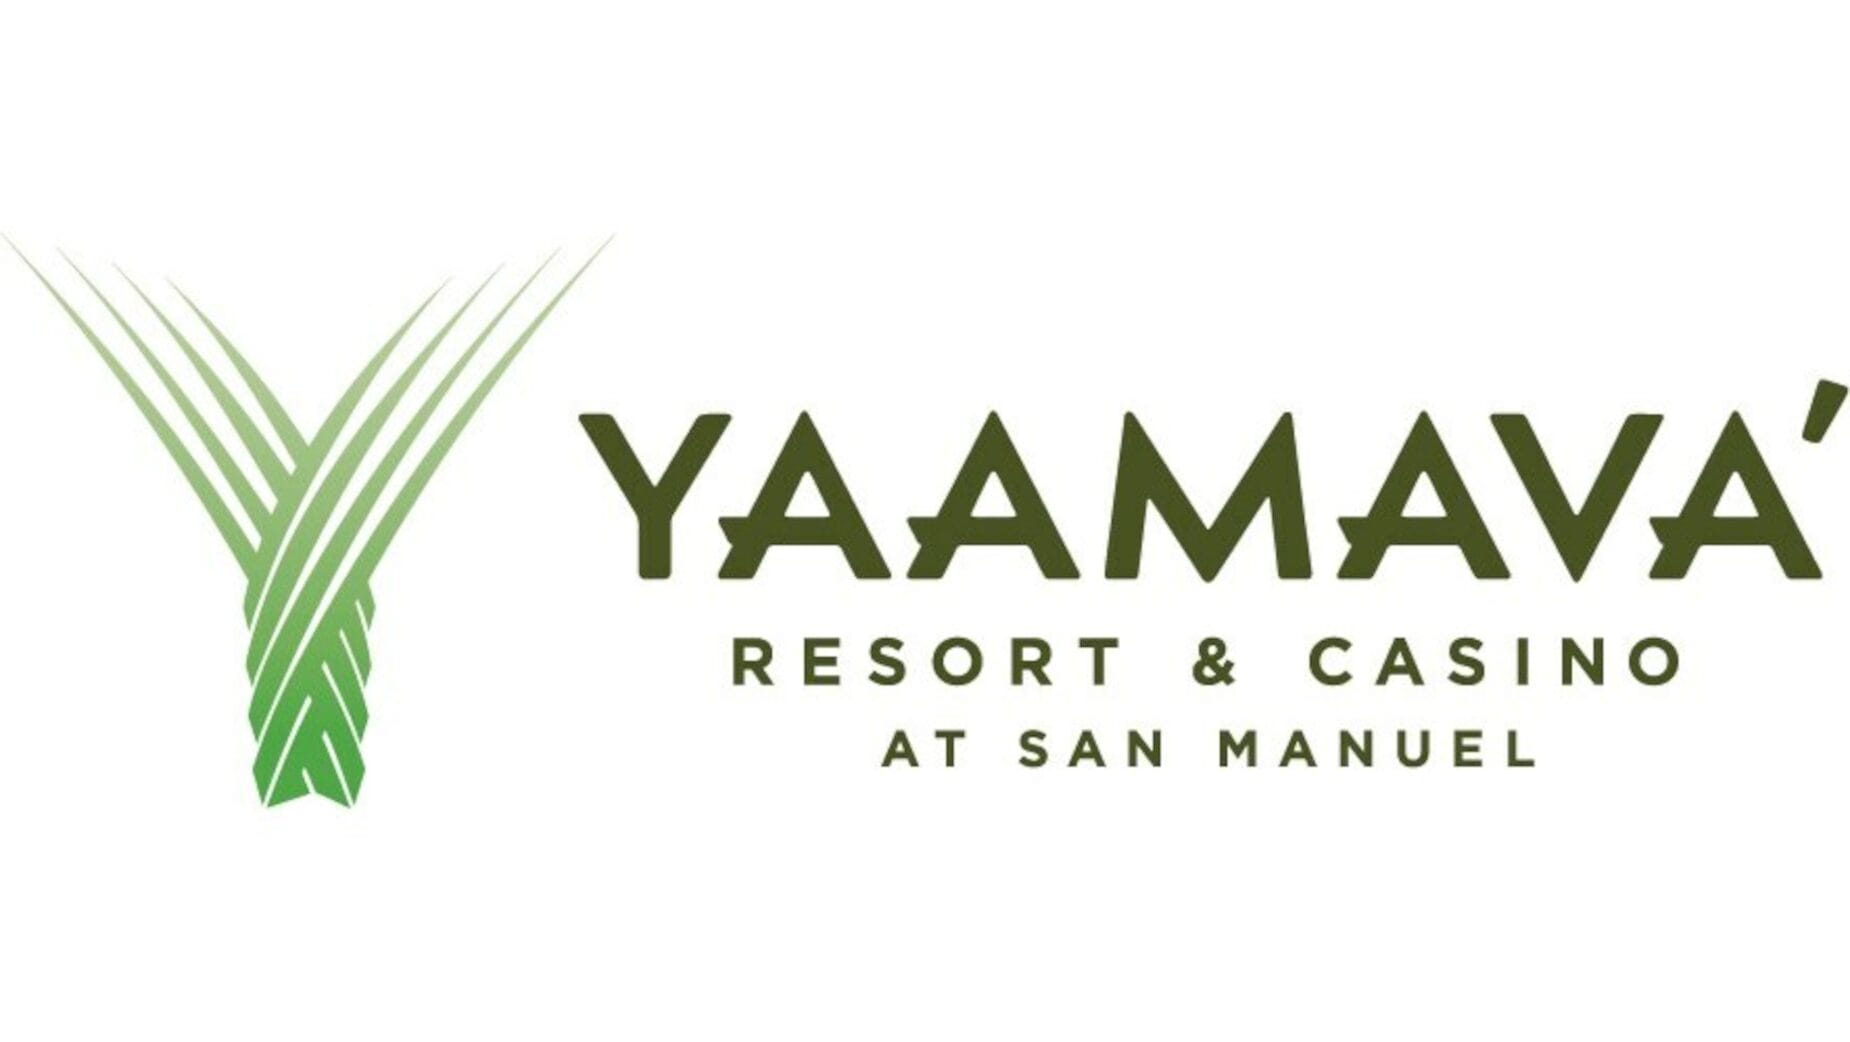 VaynerMedia LA Selected as Integrated Agency for Yaamava’ Resort & Casino